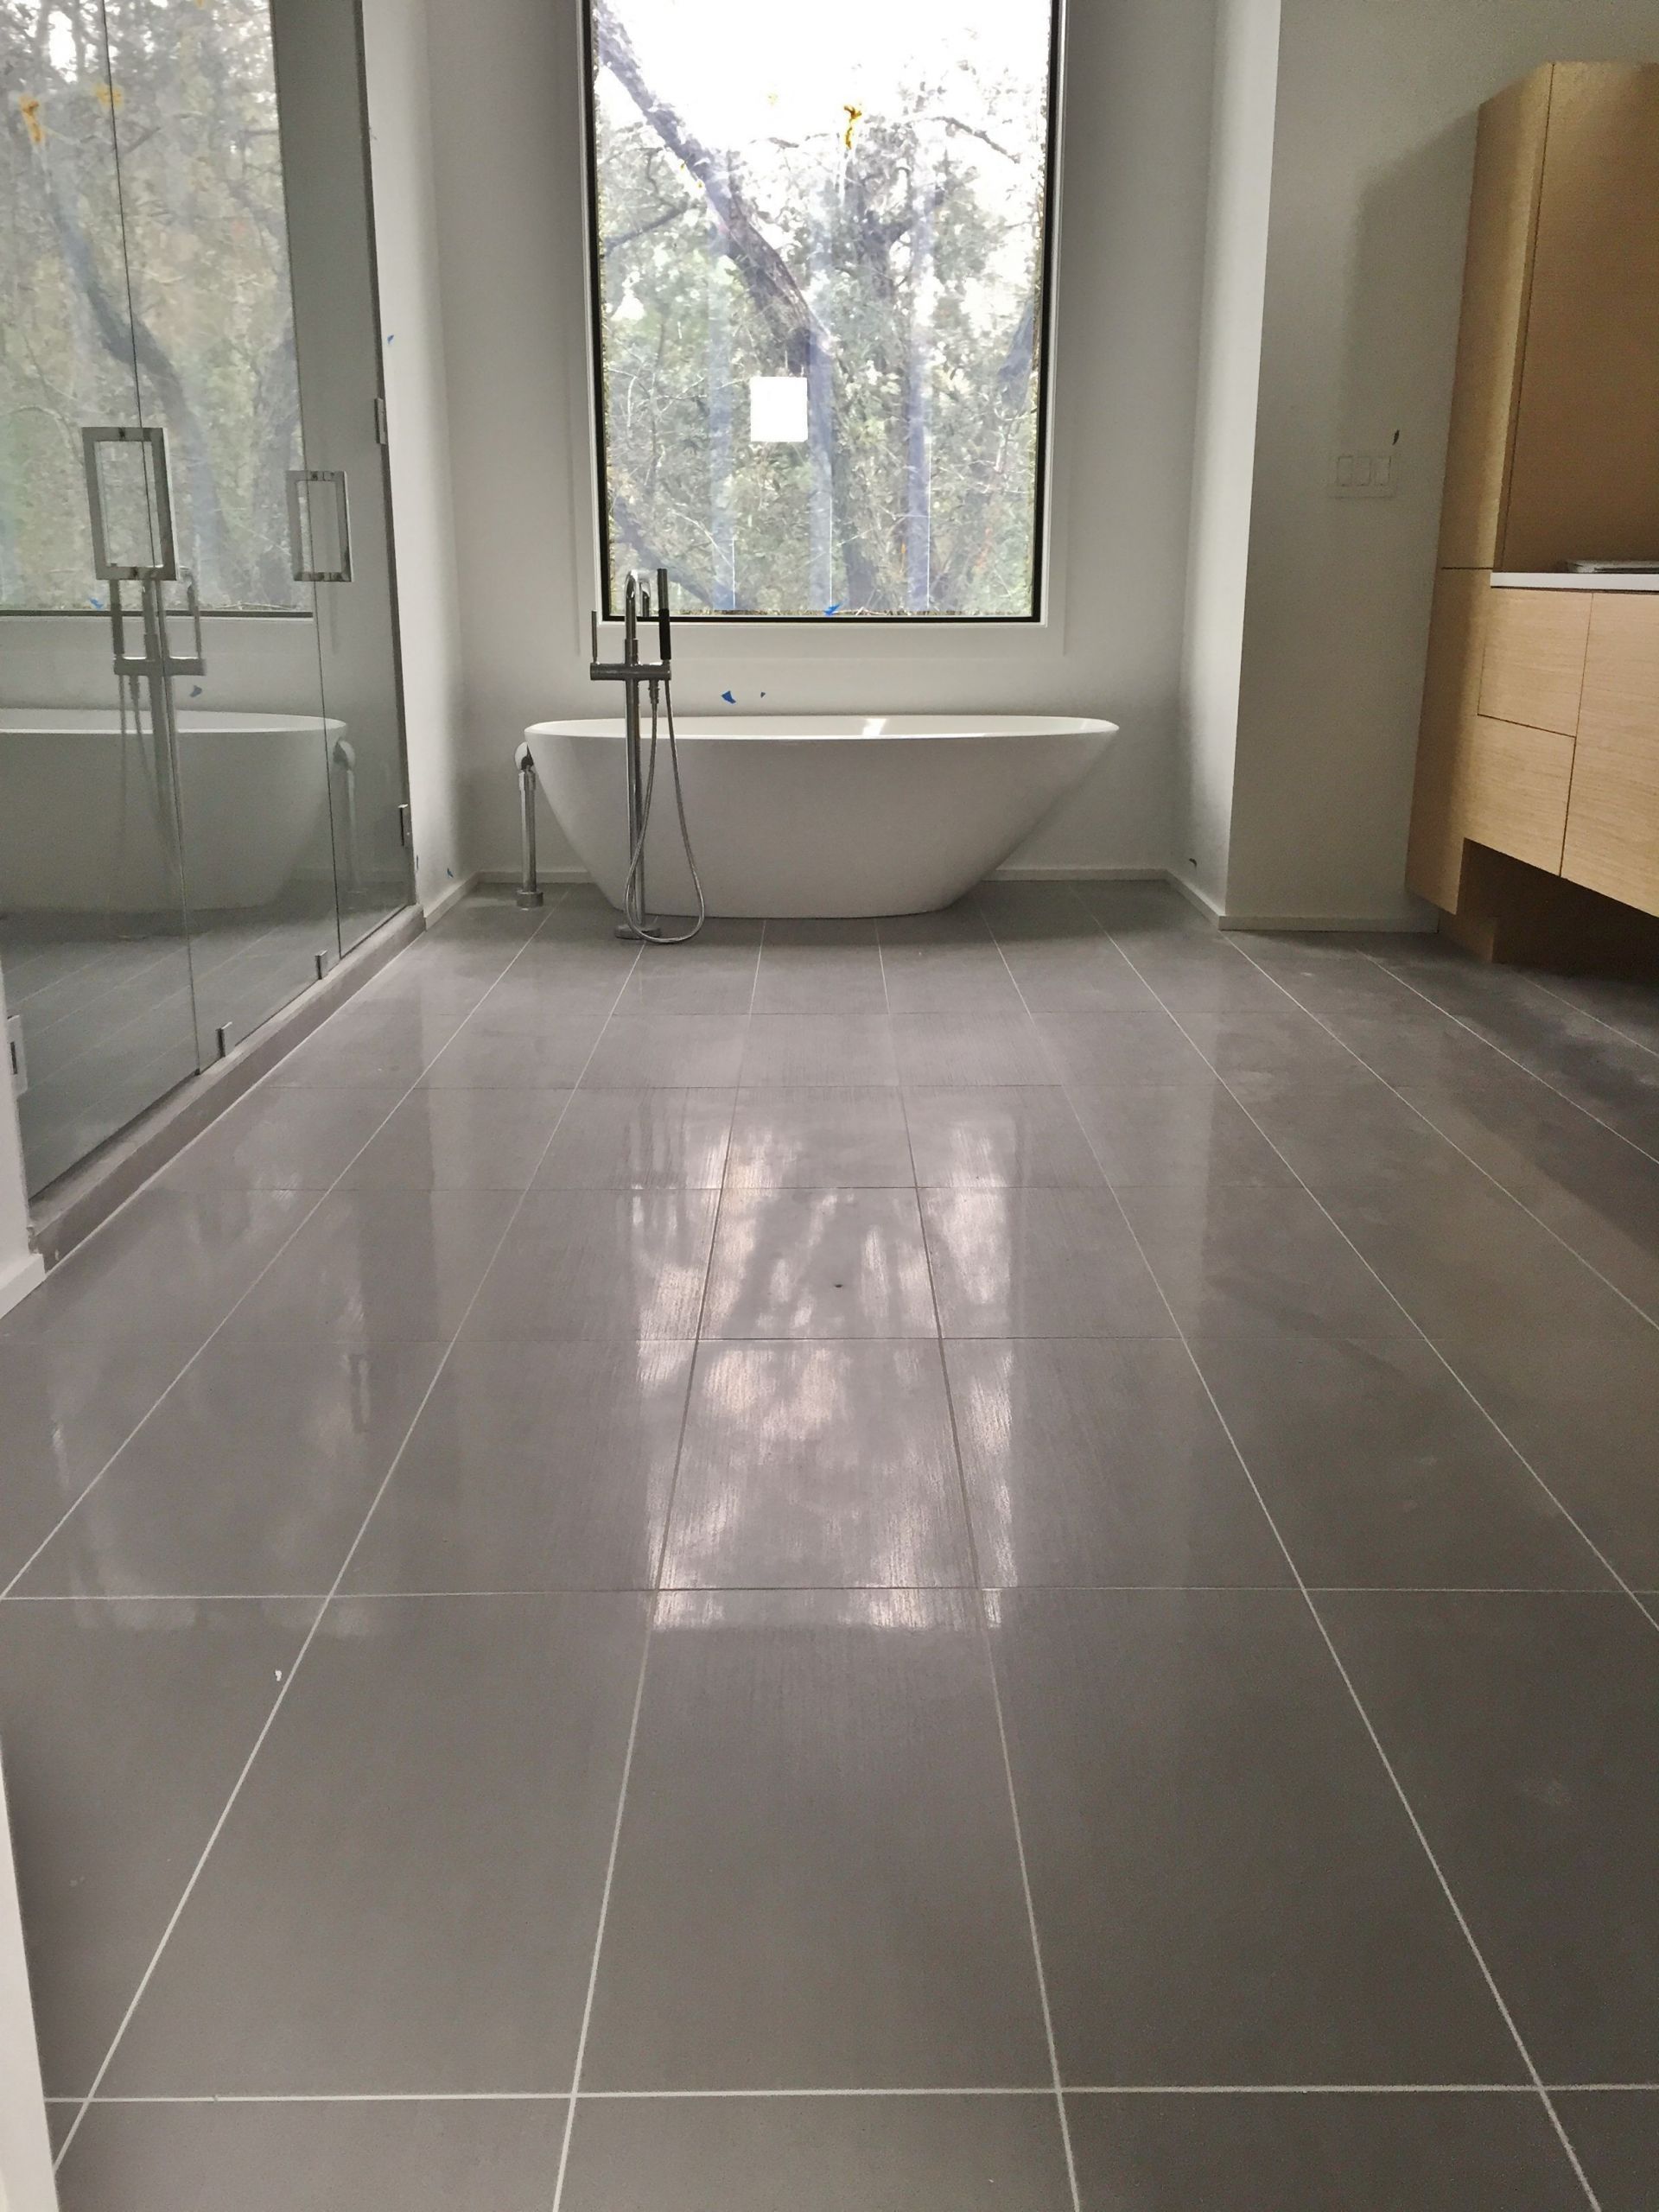 Ceramic Bathroom Floor Tile
 12x24 porcelain tile on Master Bathroom floor